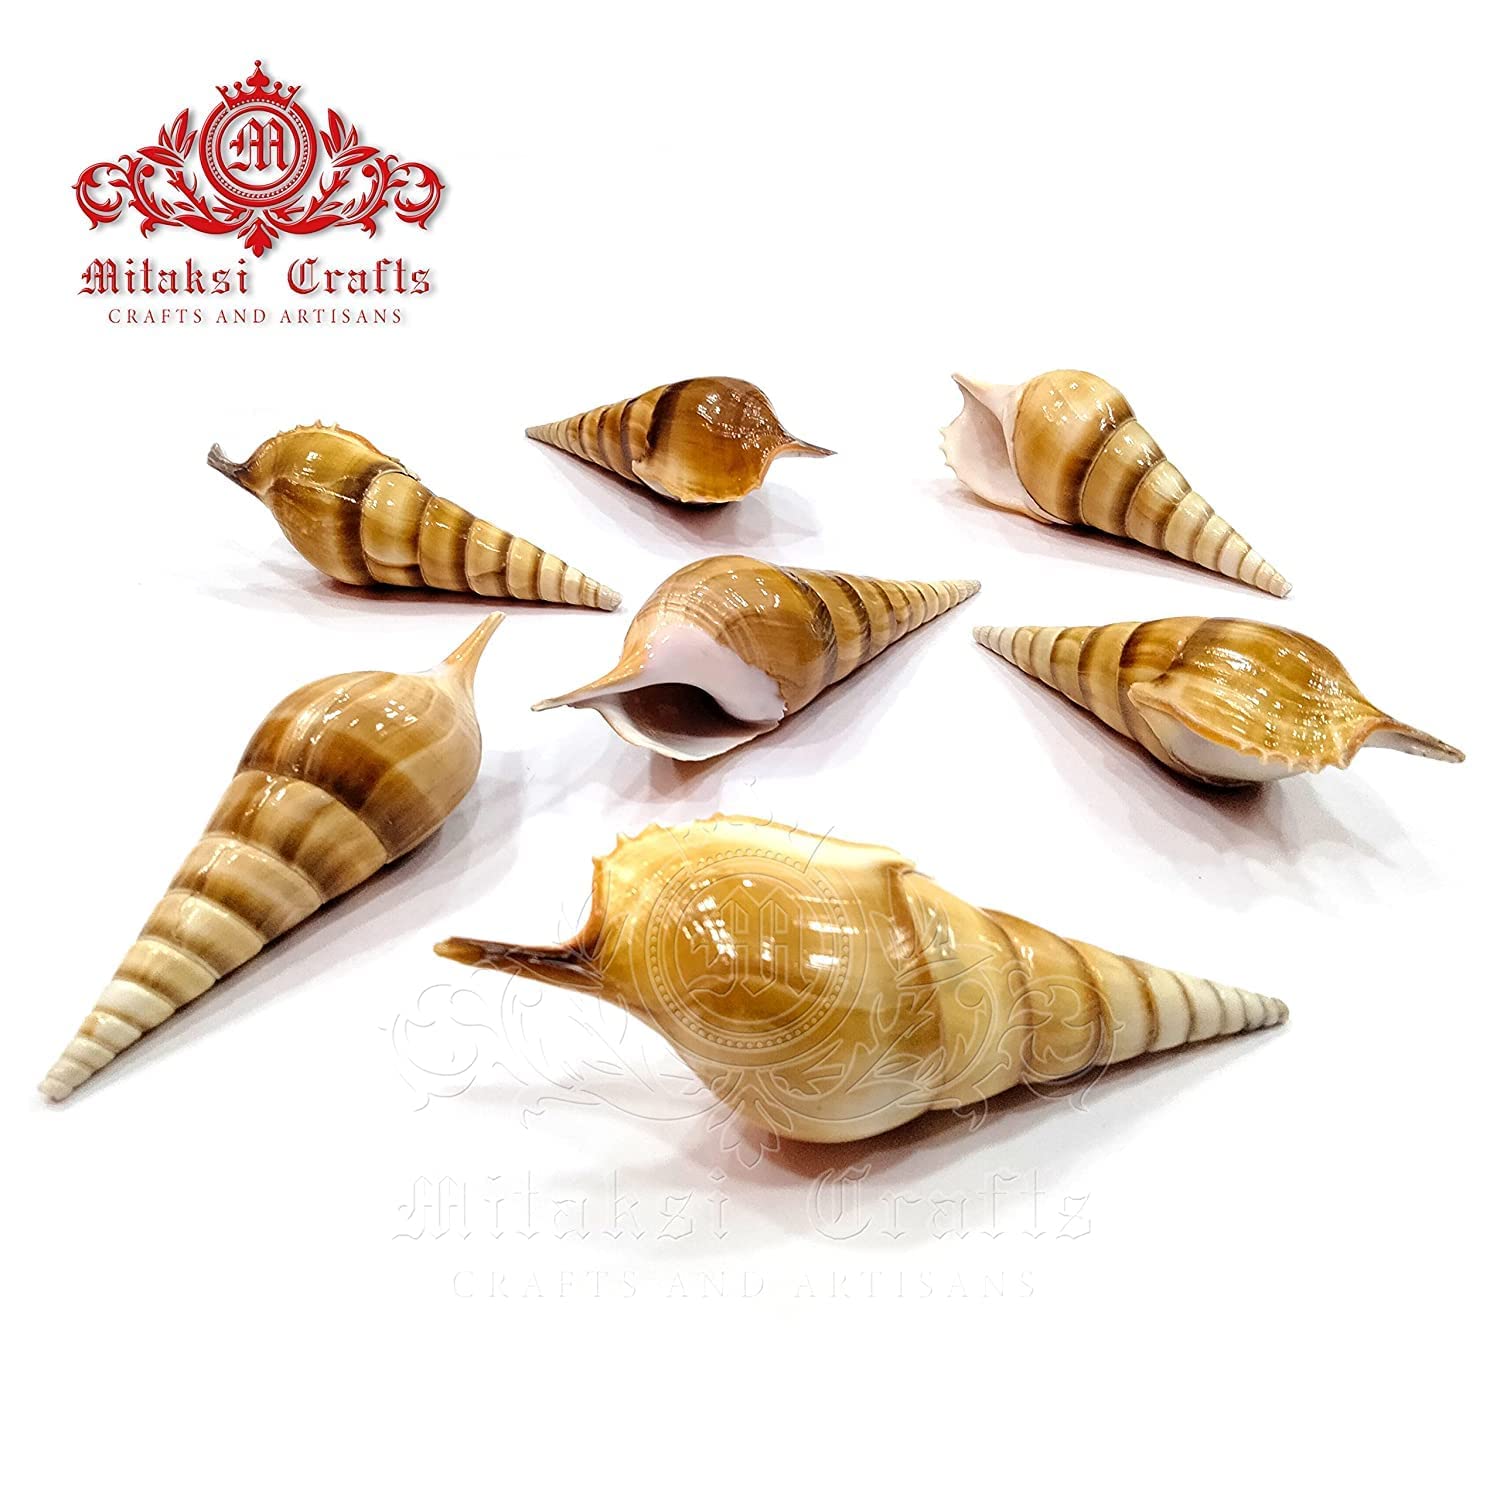 Seashell Ezhuthani -True Cochs -Tibia Curta- Arts and Crafts Making - Pack of 10